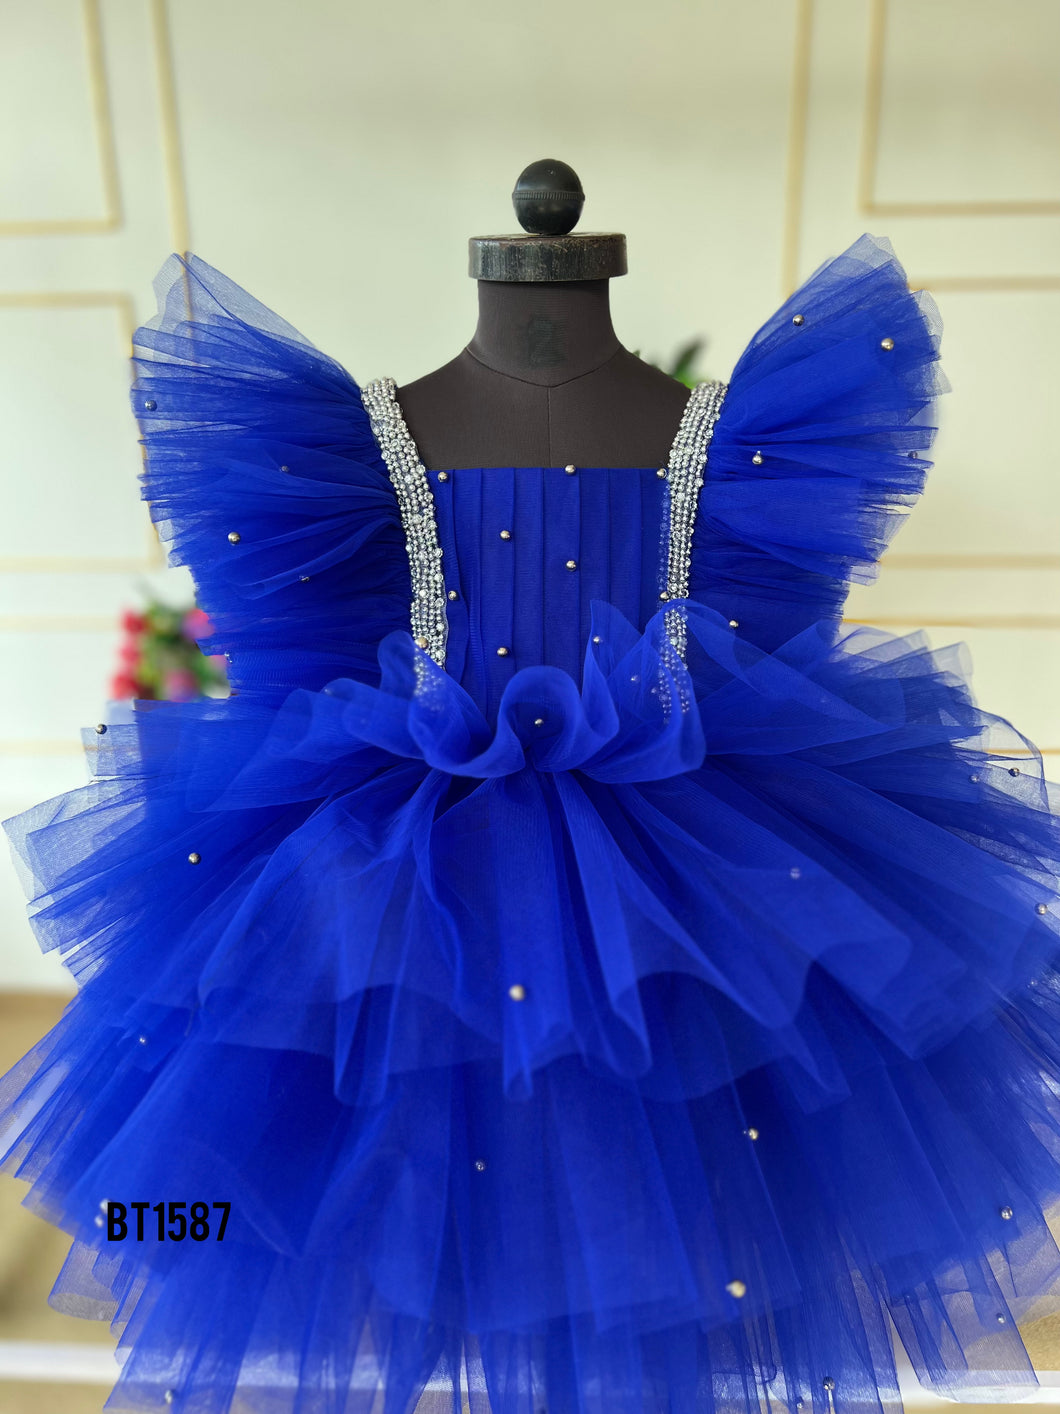 BT1587 Sapphire Sparkle – Baby’s Celebration Dress